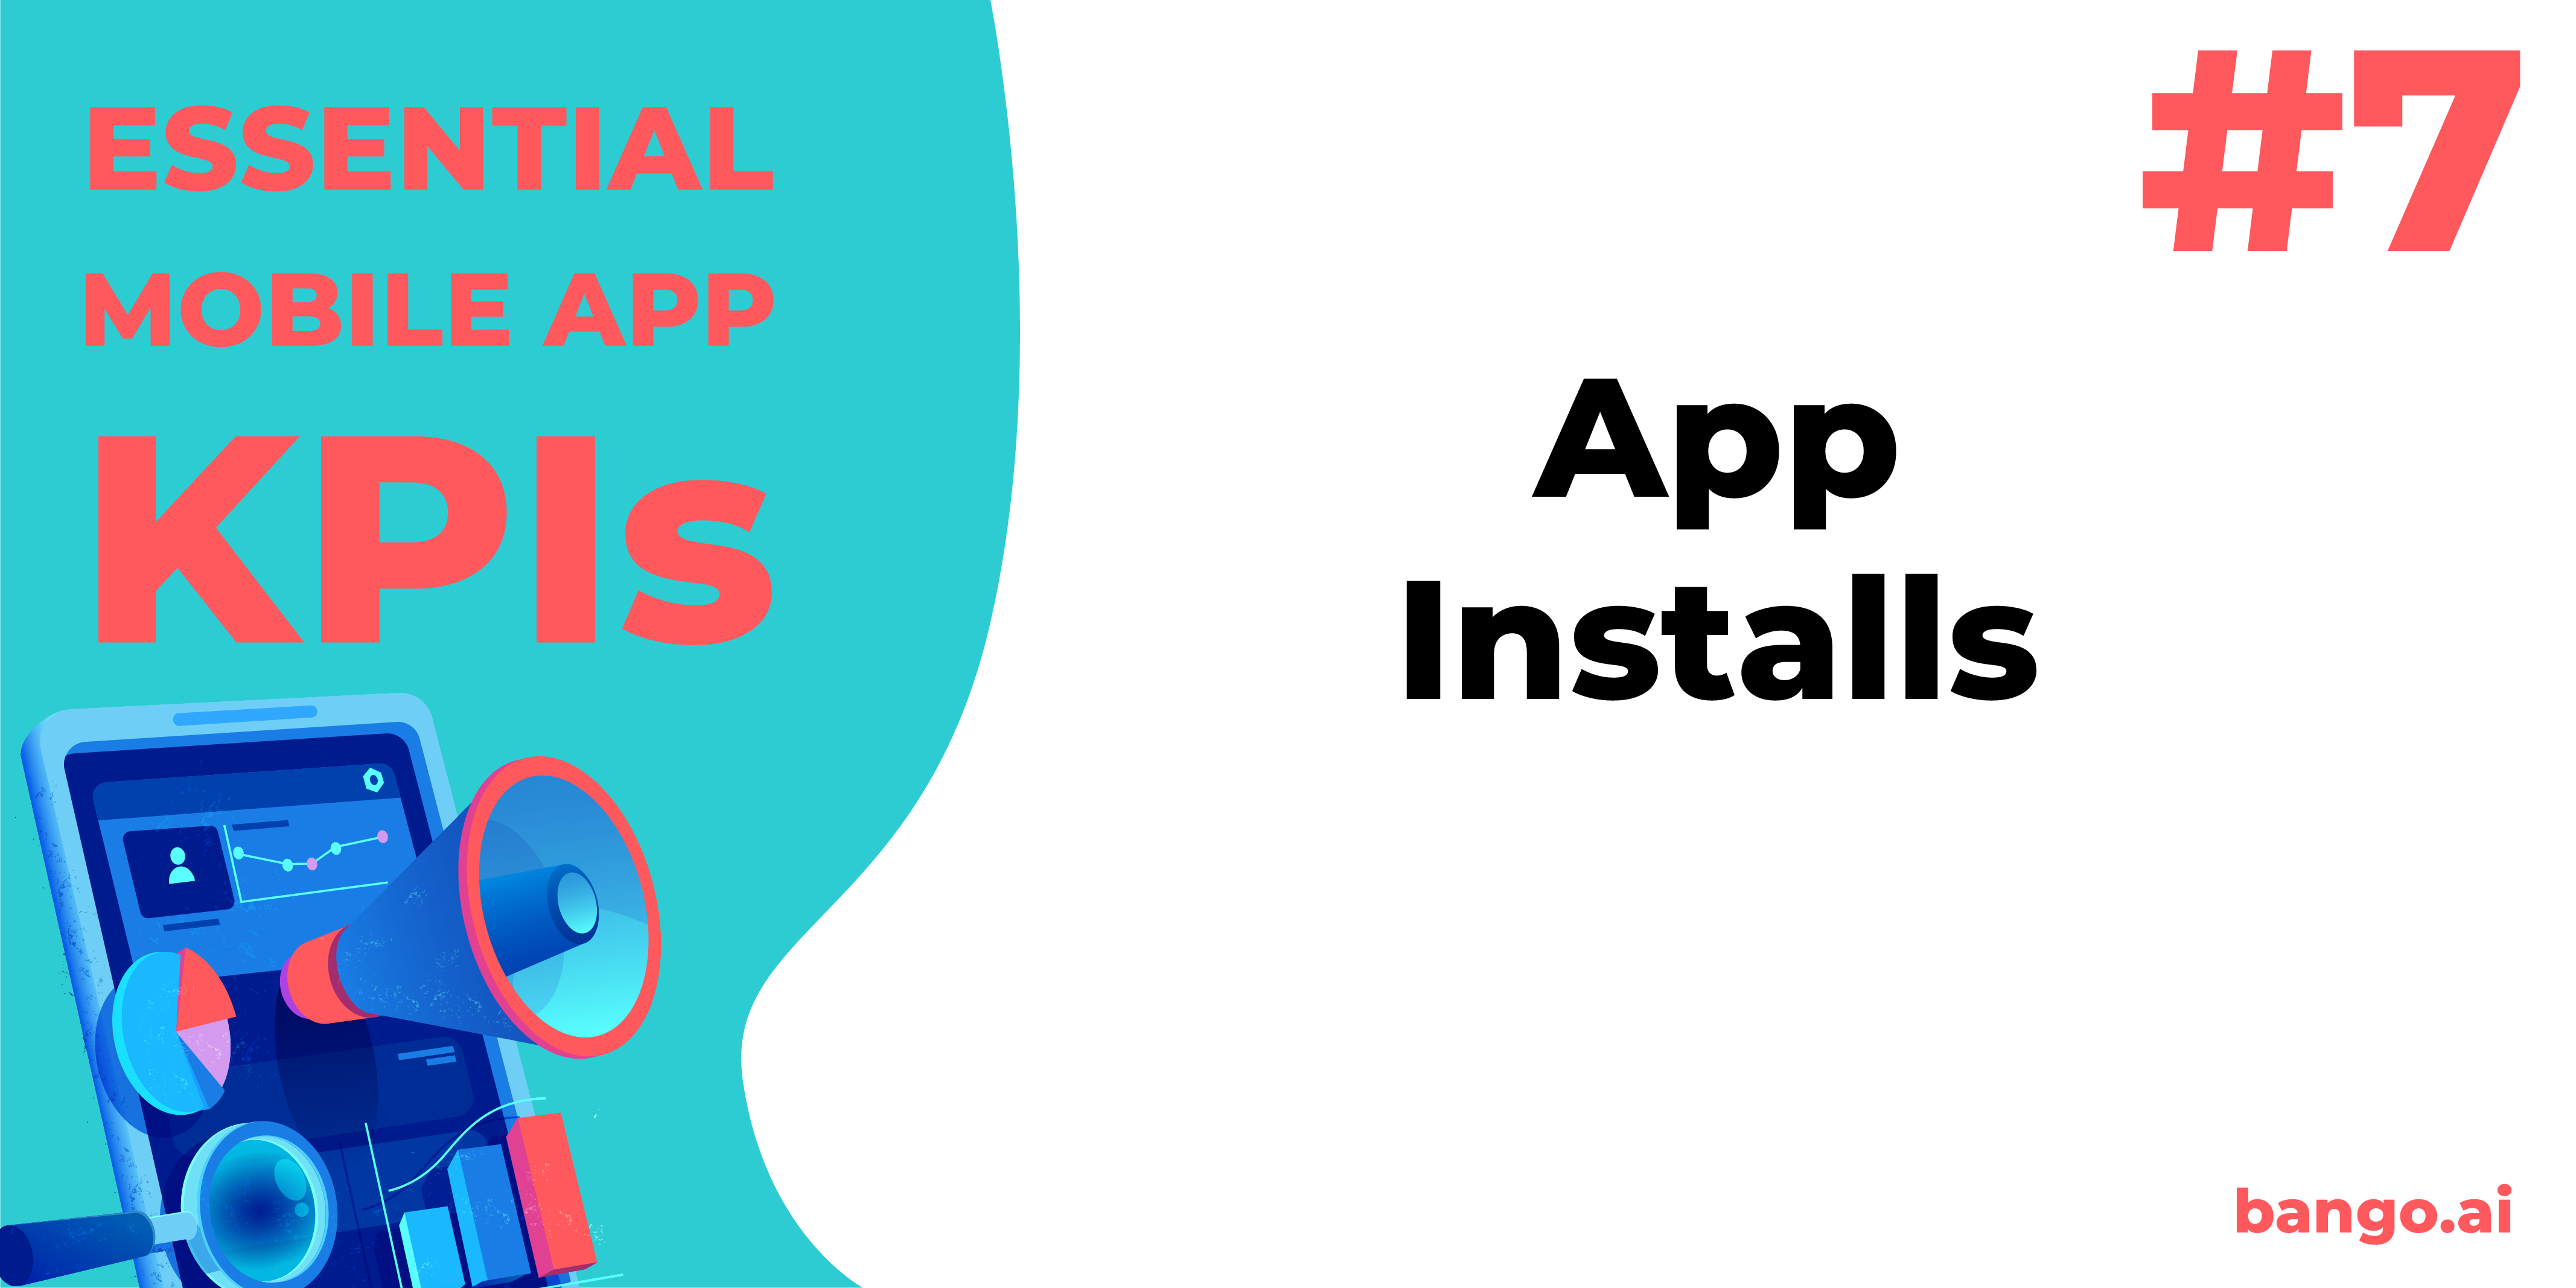 Image for Essential Mobile App Marketing KPIs: App Installs